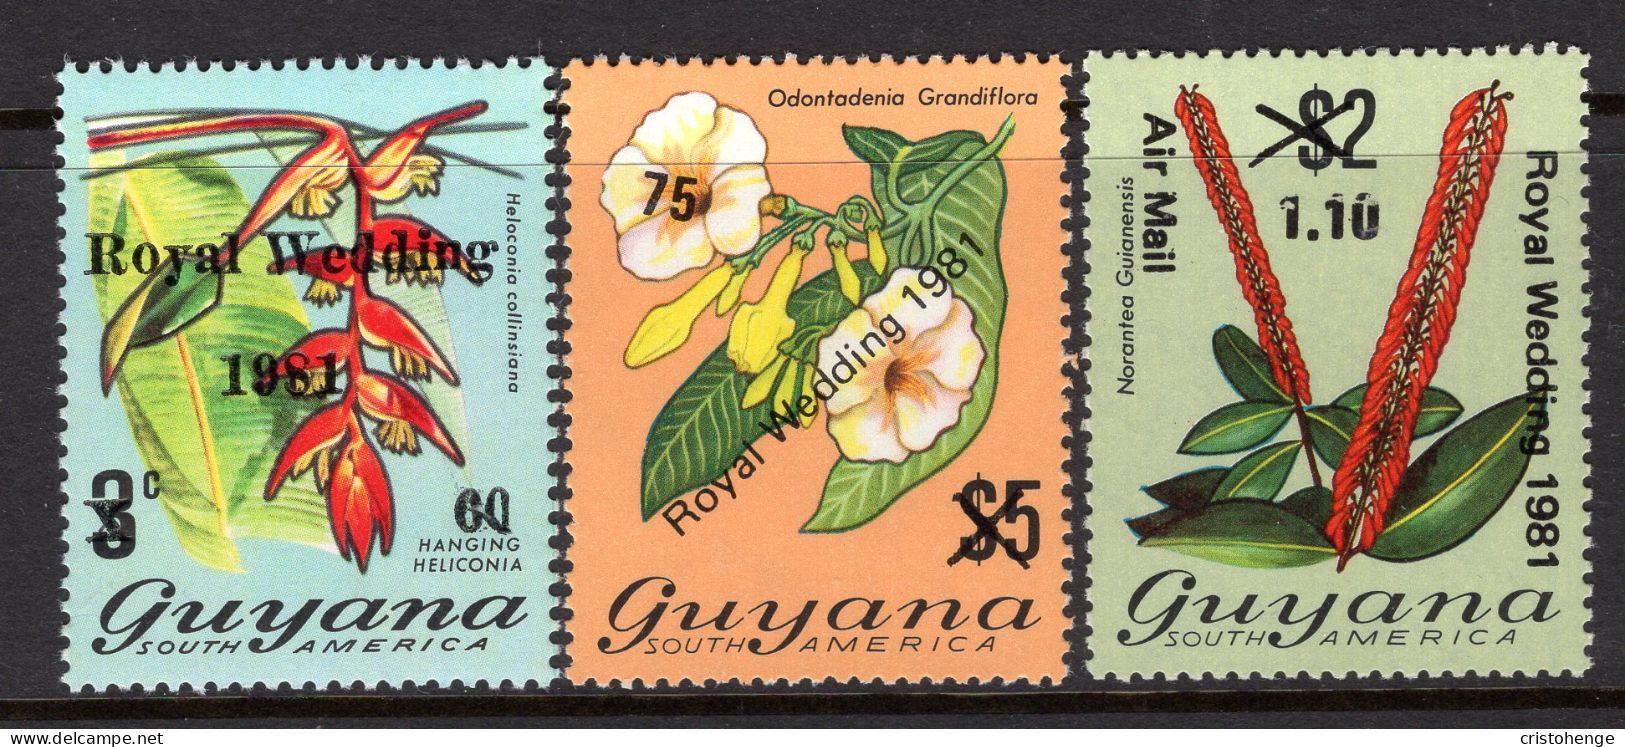 Guyana 1981 Royal Wedding Set HM (SG 841-843) - Guyana (1966-...)